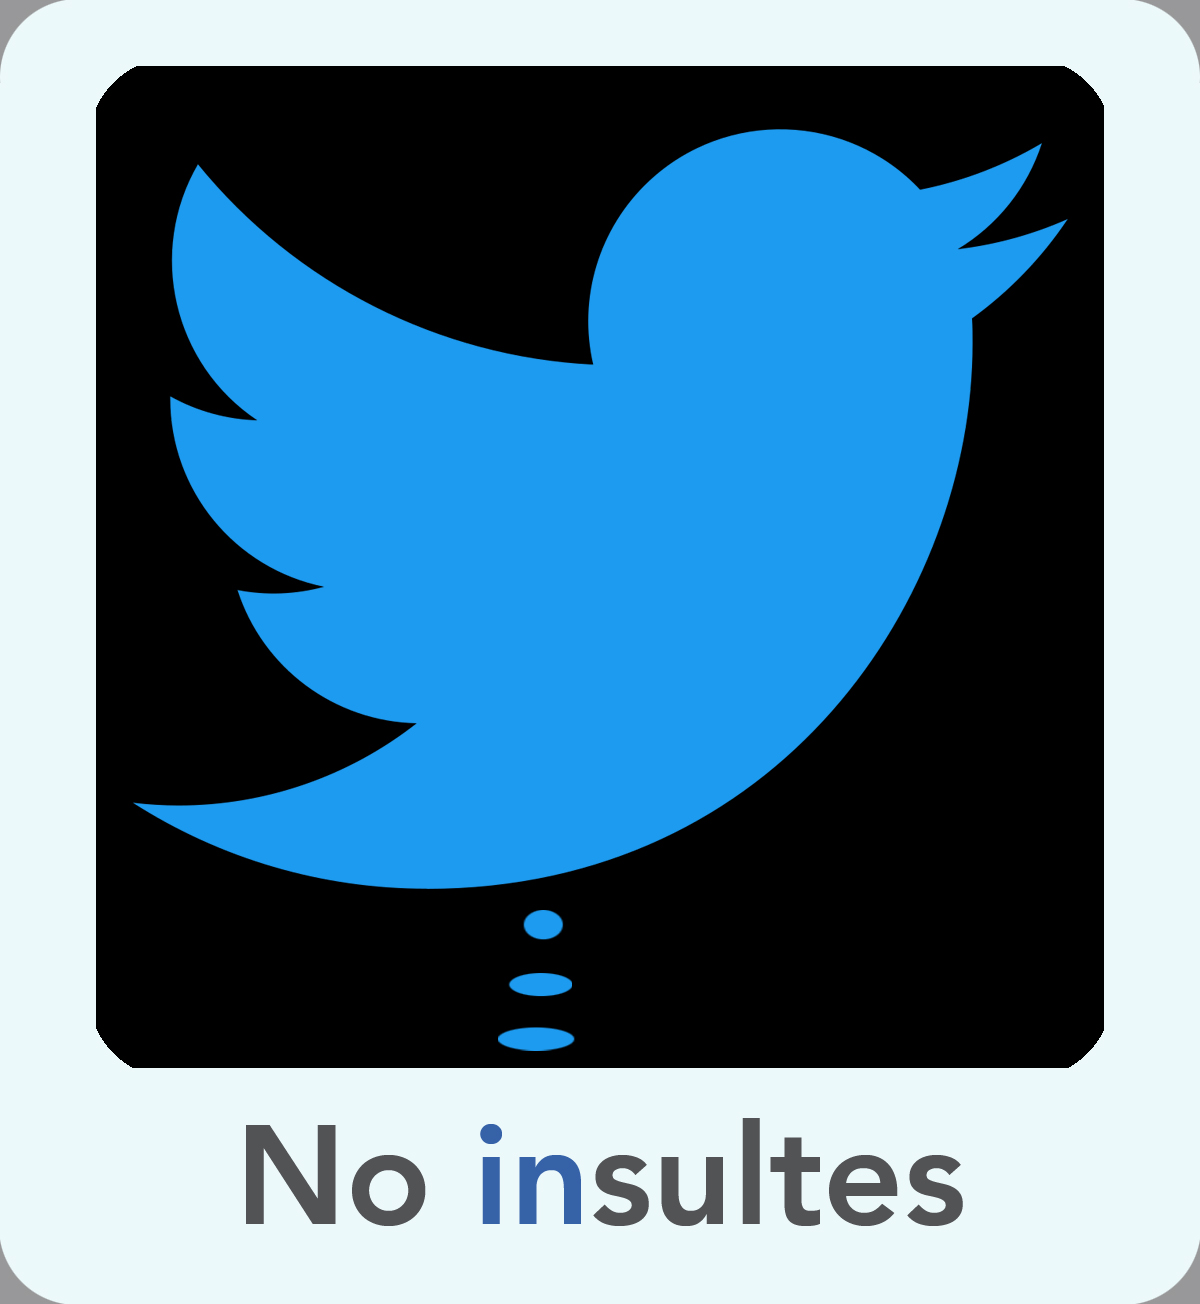 A No insults twit